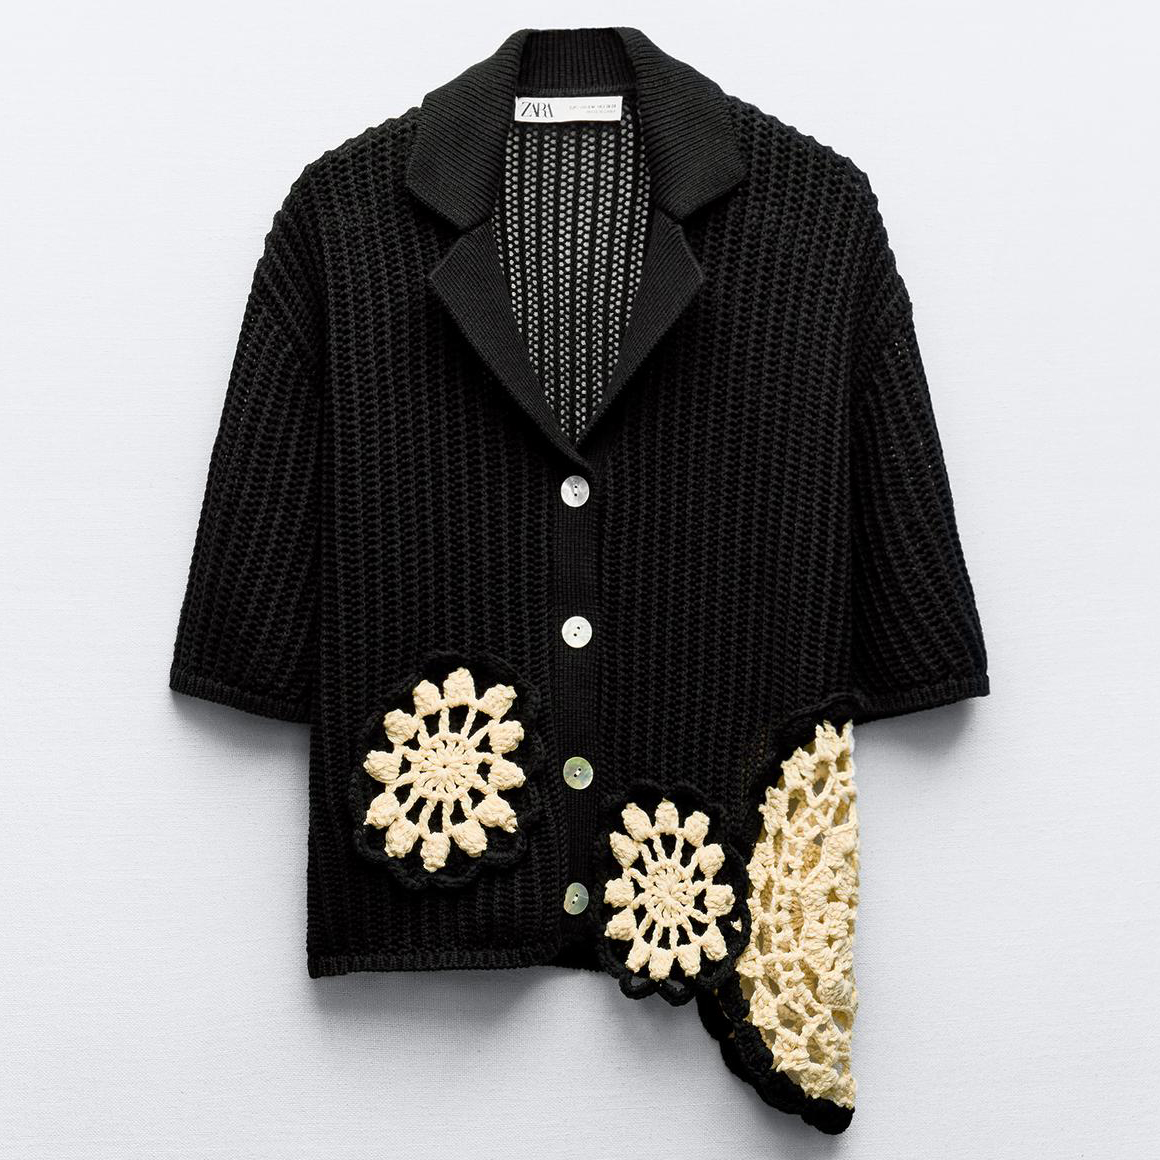 Кардиган Zara Crochet Knit, черный кардиган zara crochet knit черный